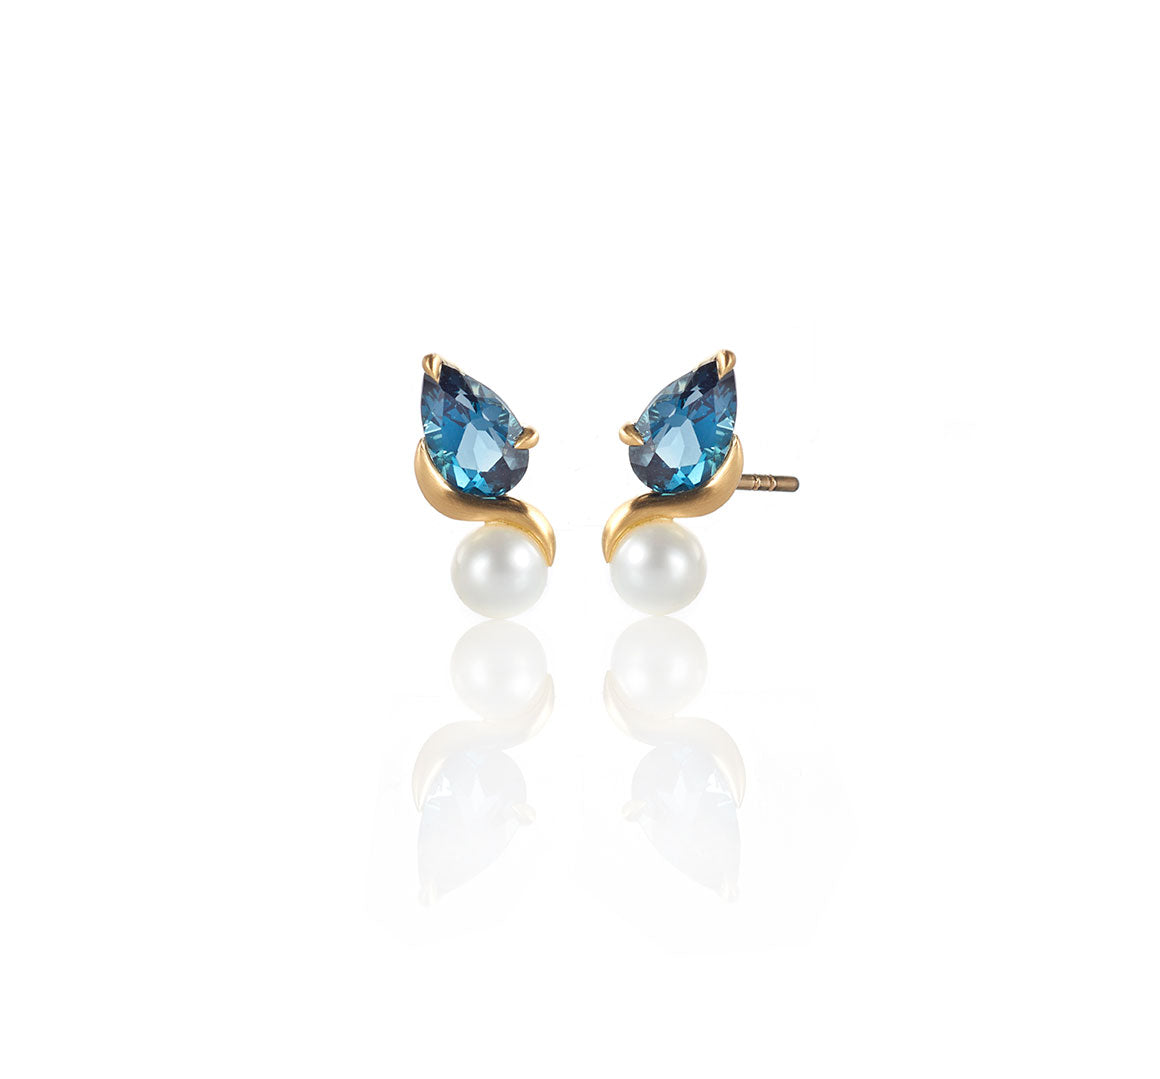 Pearl and London Blue Topaz stud earrings